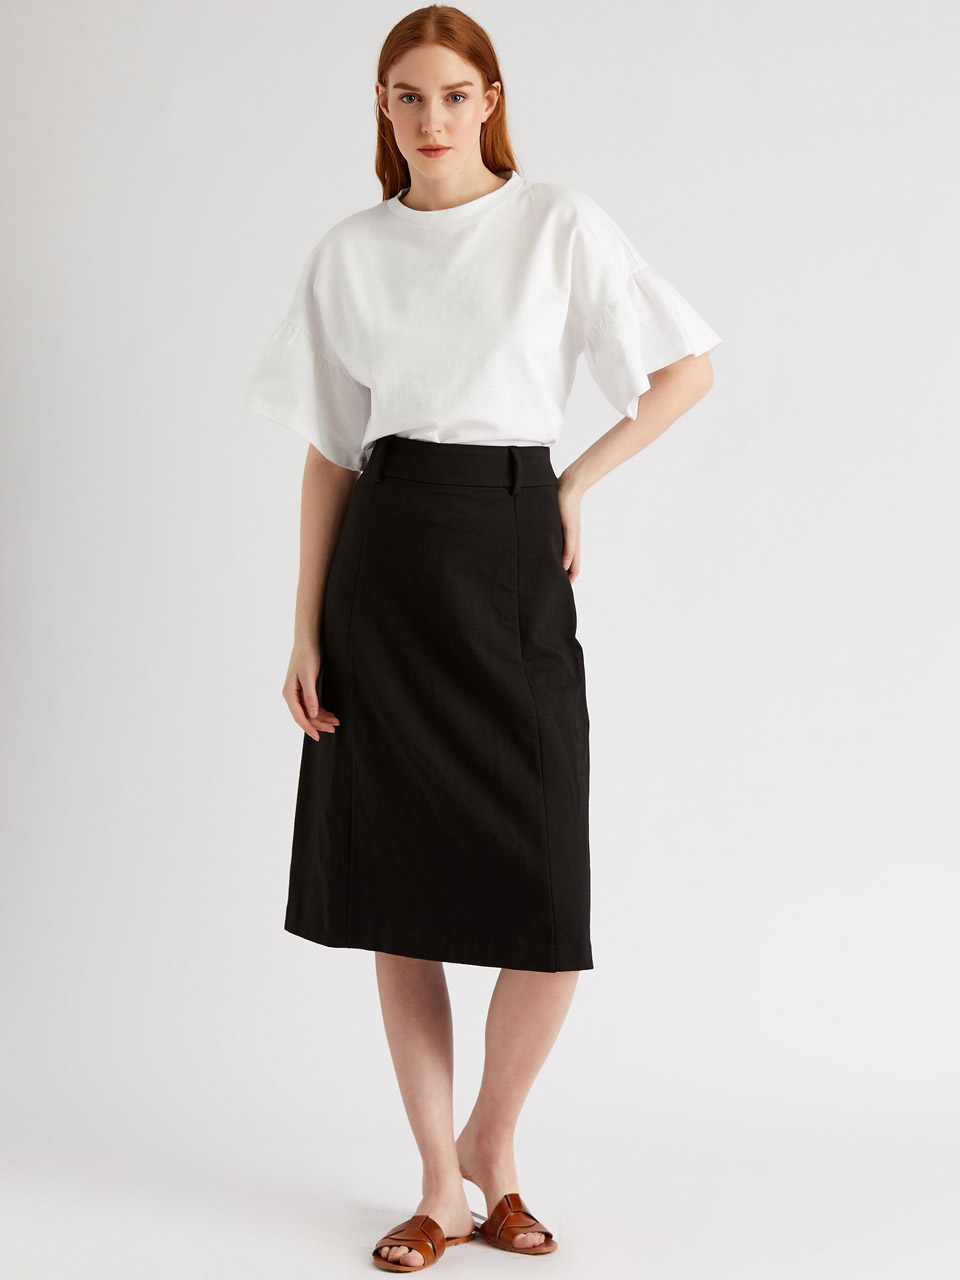 Stretchy Fabric High Waist Skirt